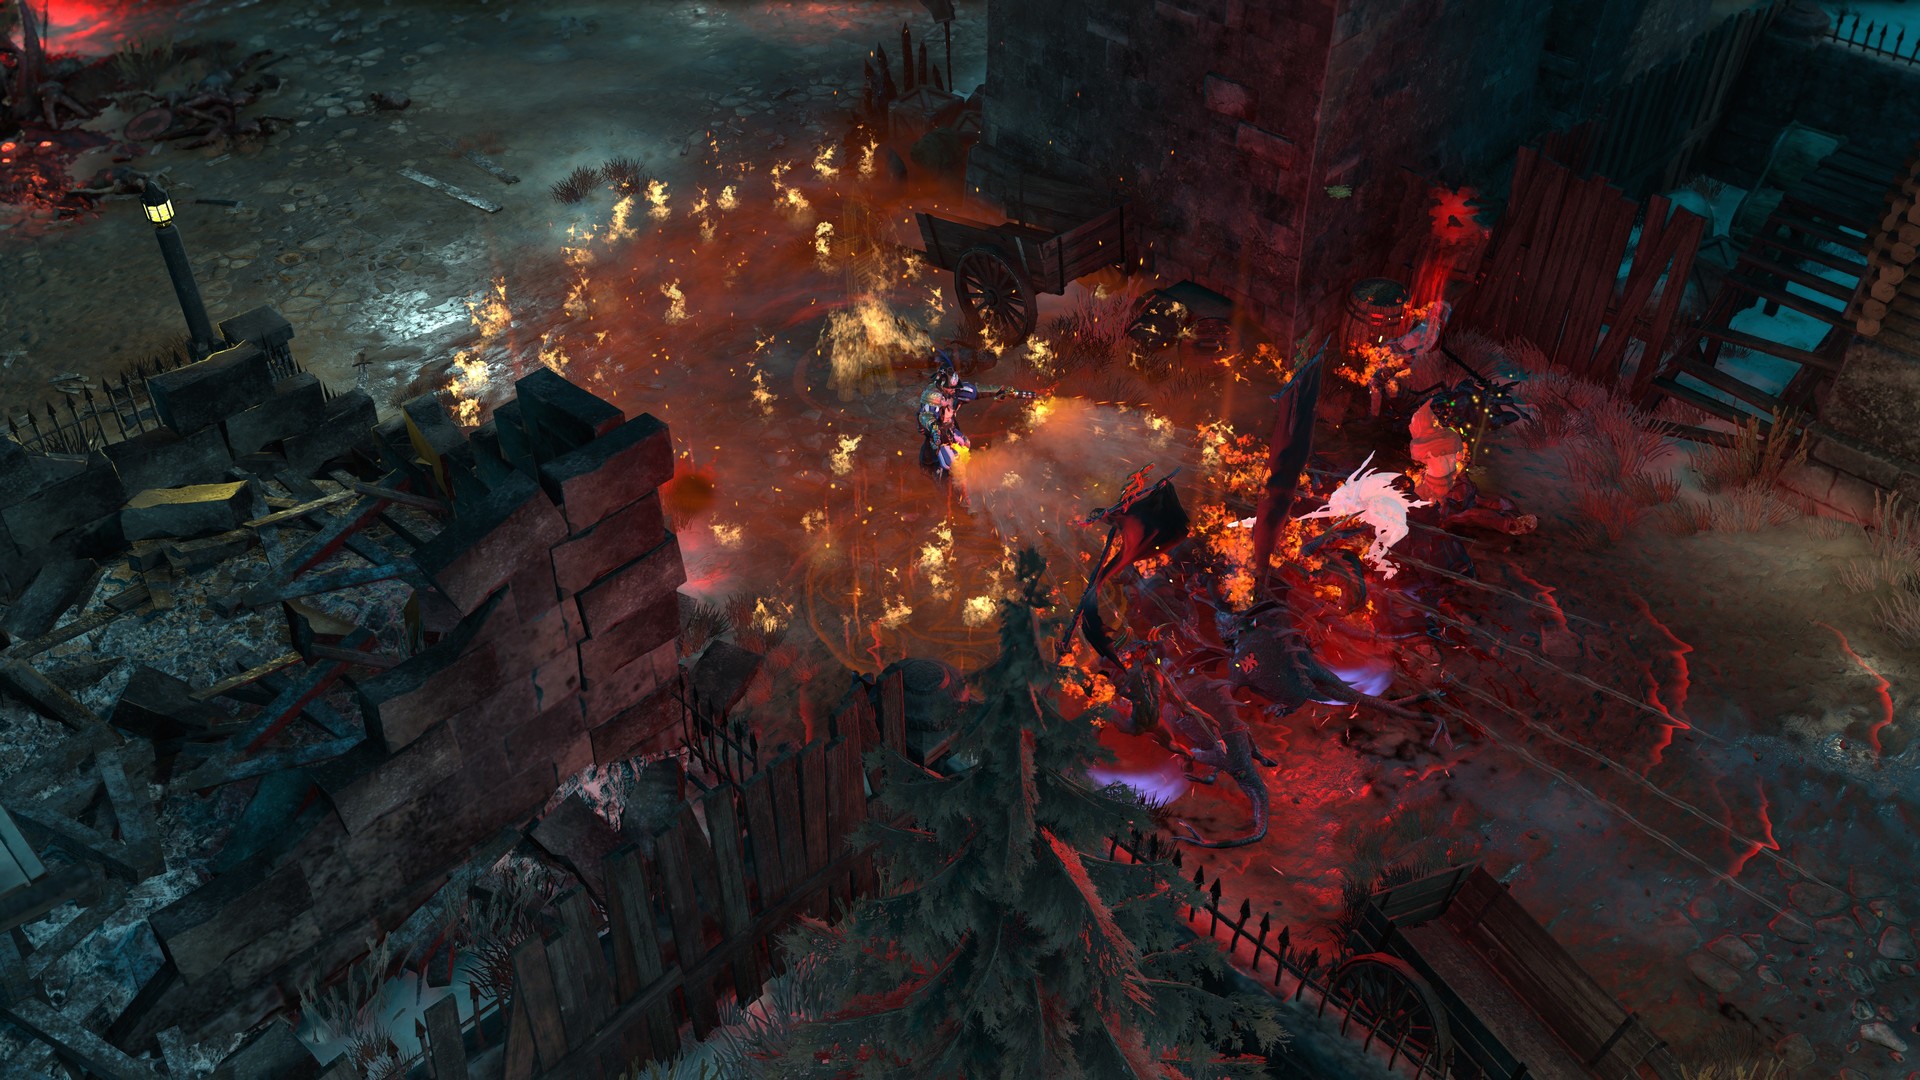 Warhammer: Chaosbane - Witch Hunter DLC EU Steam CD Key